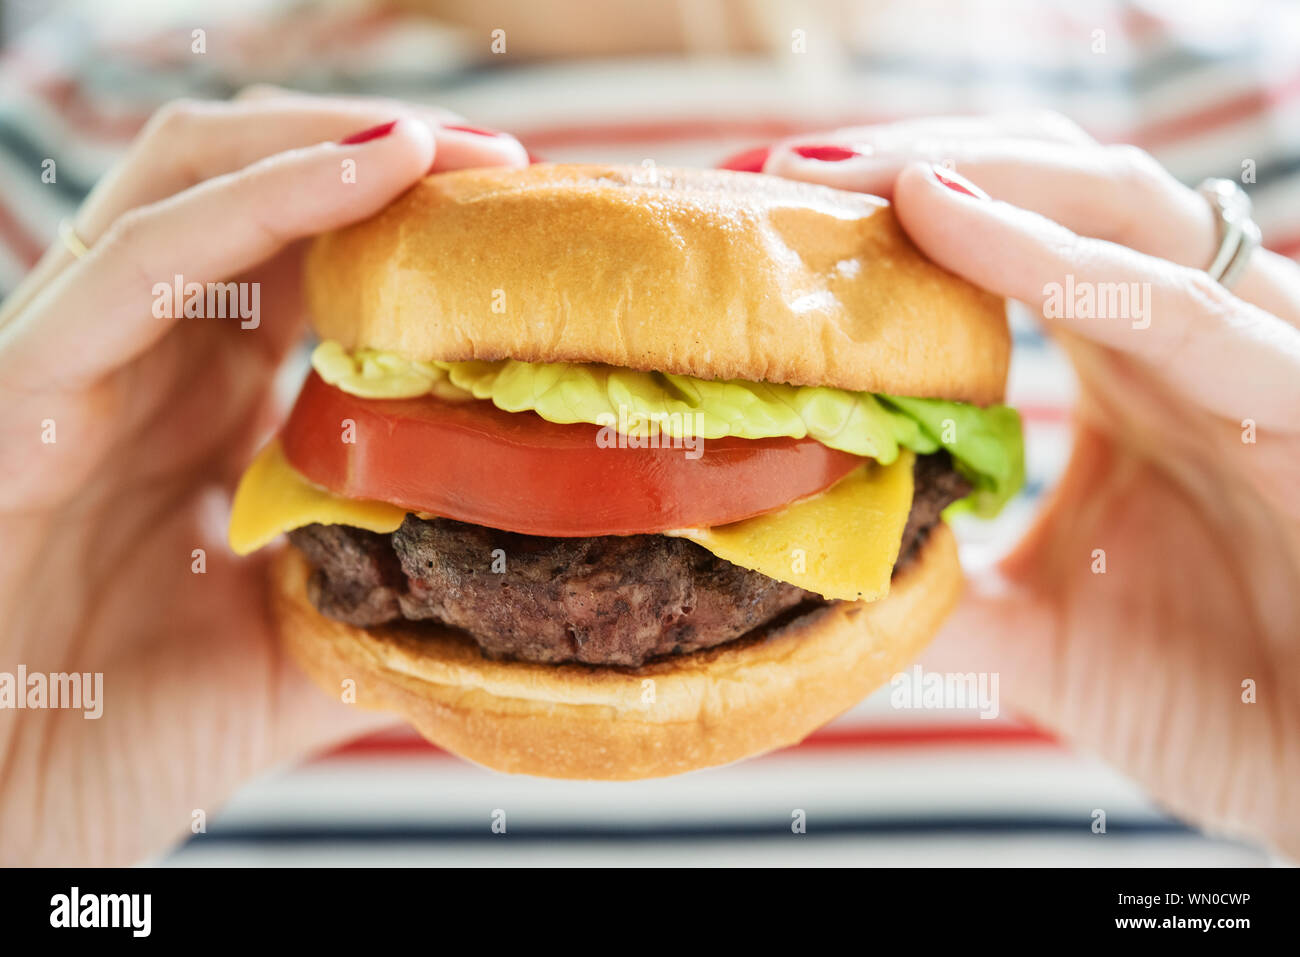 Woman holding hamburger Stock Photo